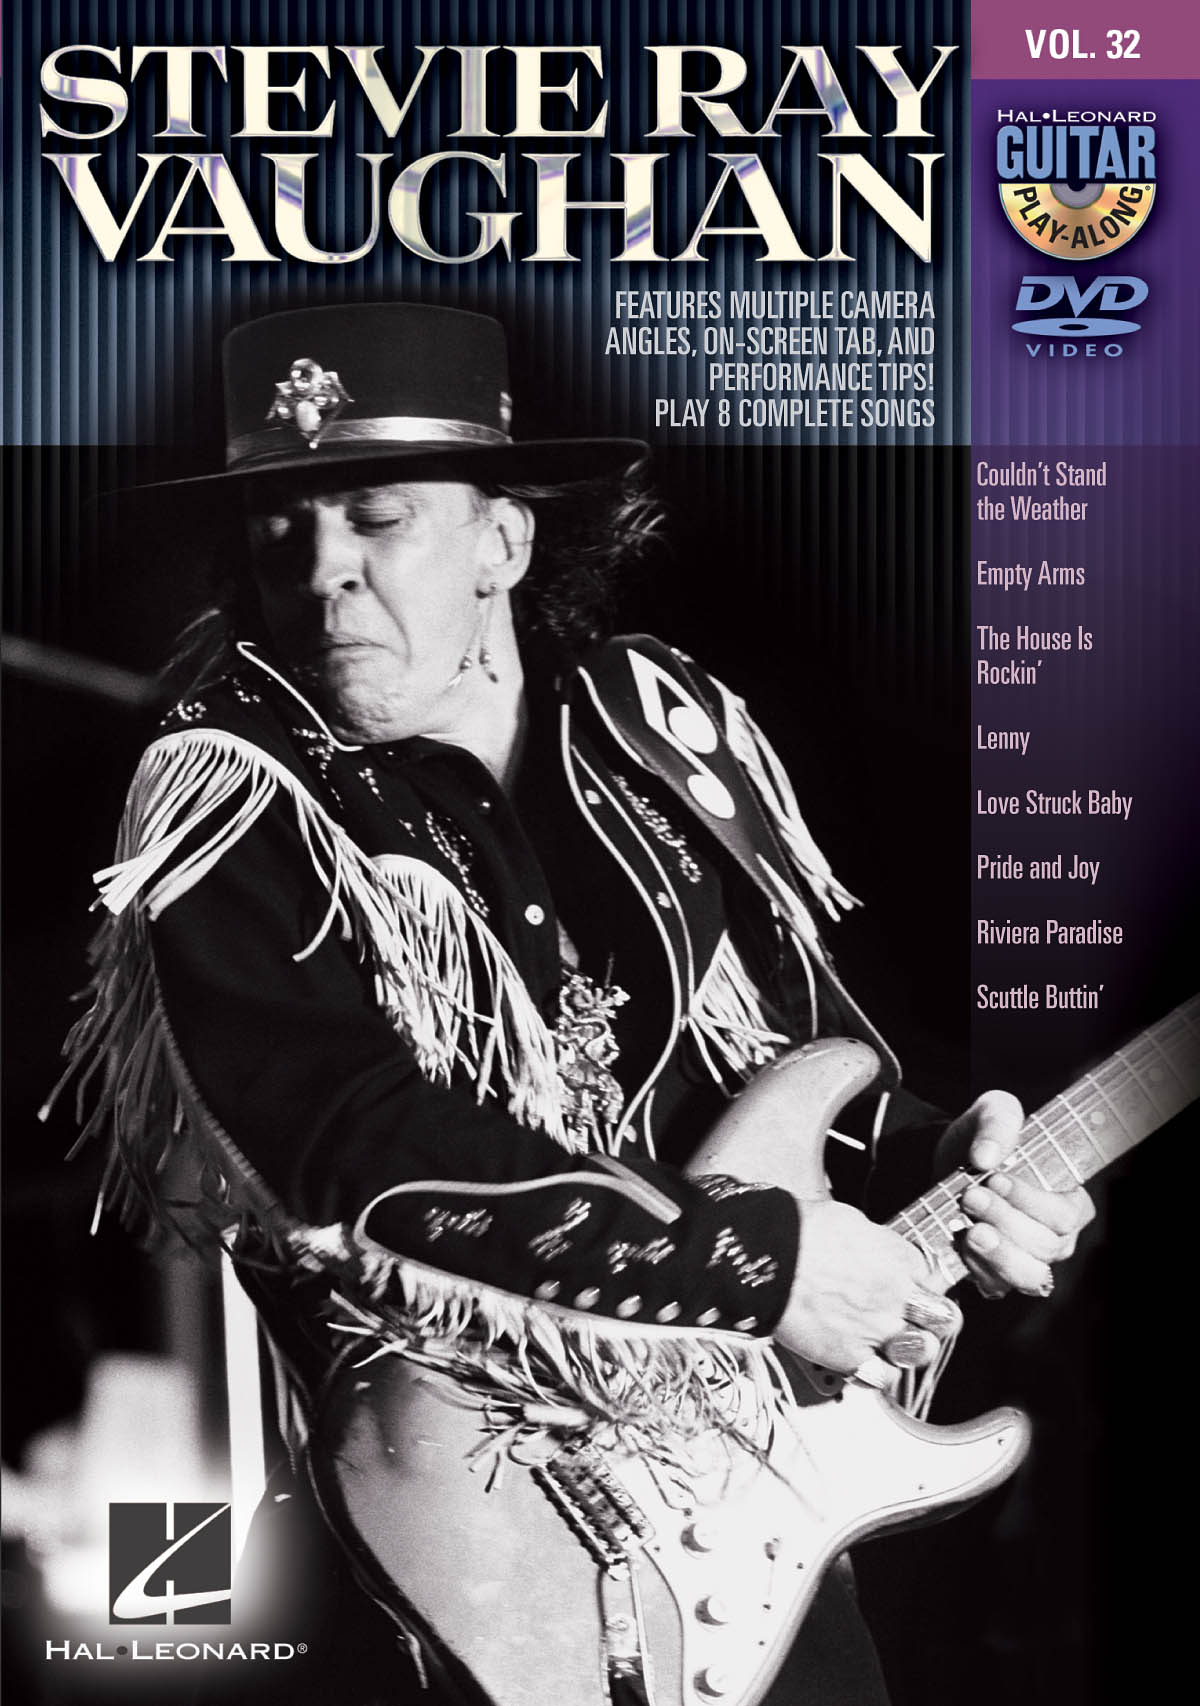 Stevie Ray Vaughan - Guitar Play-Along DVD Volume 32